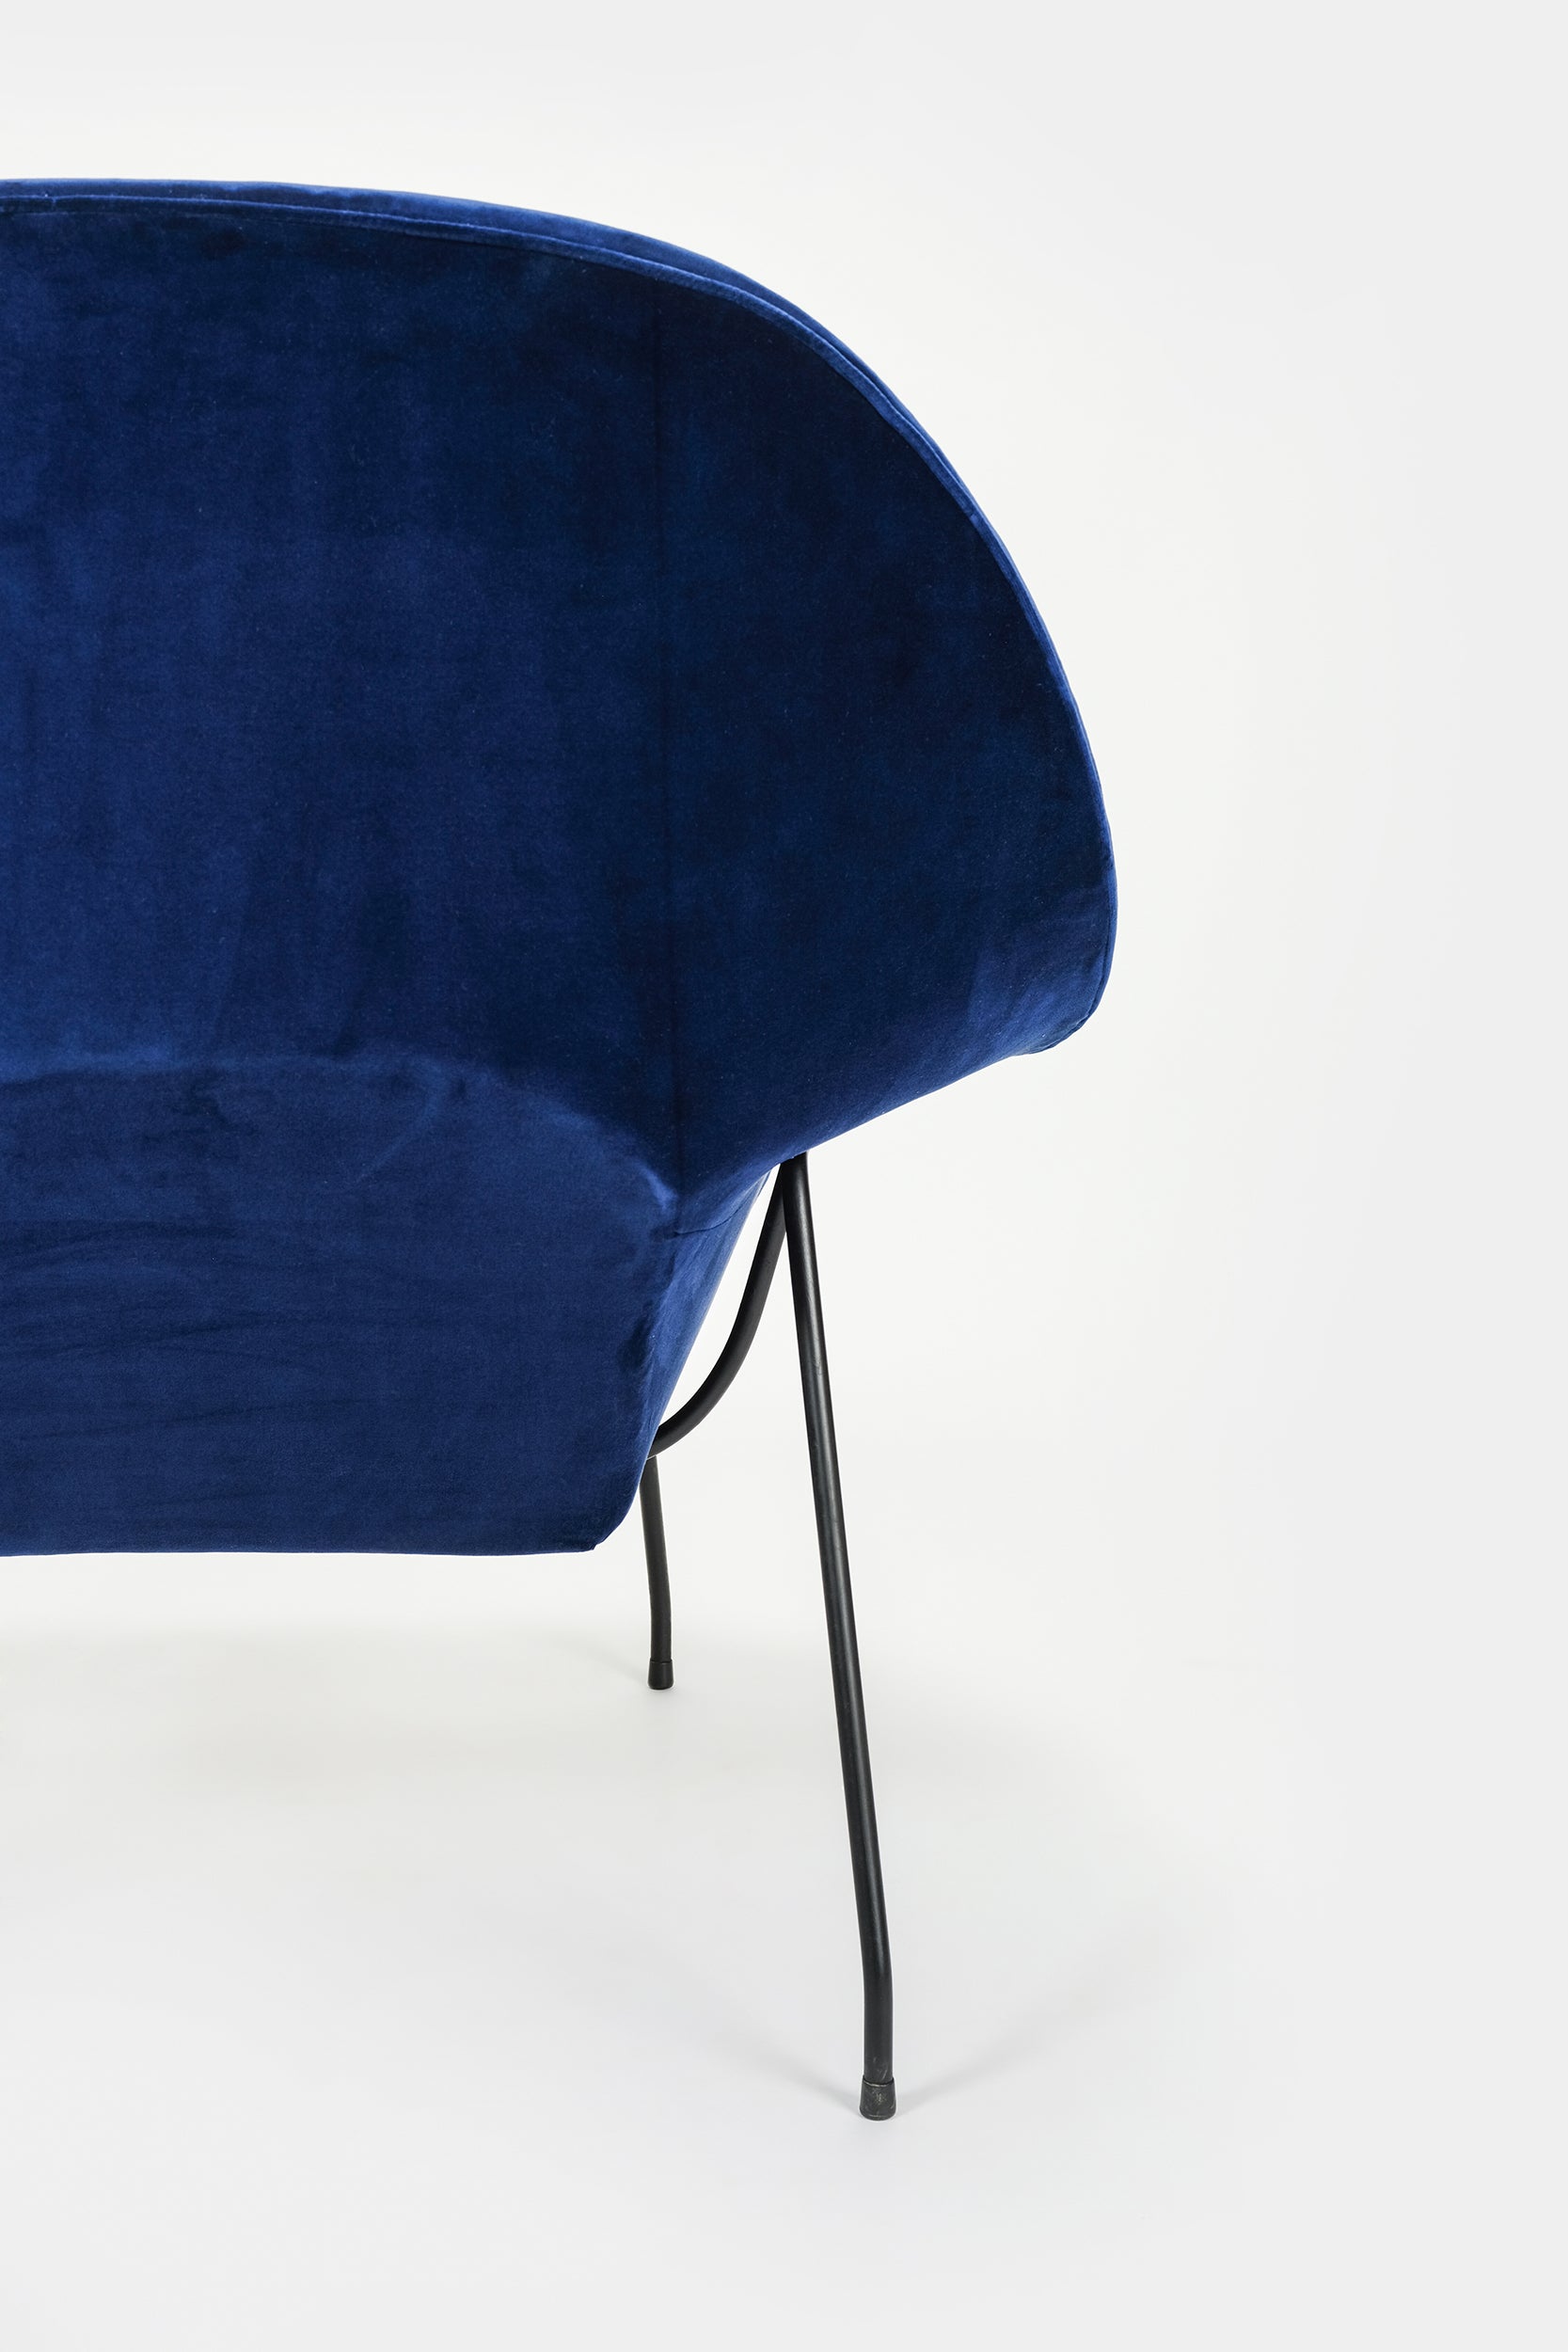 Eero Saarinen Womb Chair Knoll International 50er